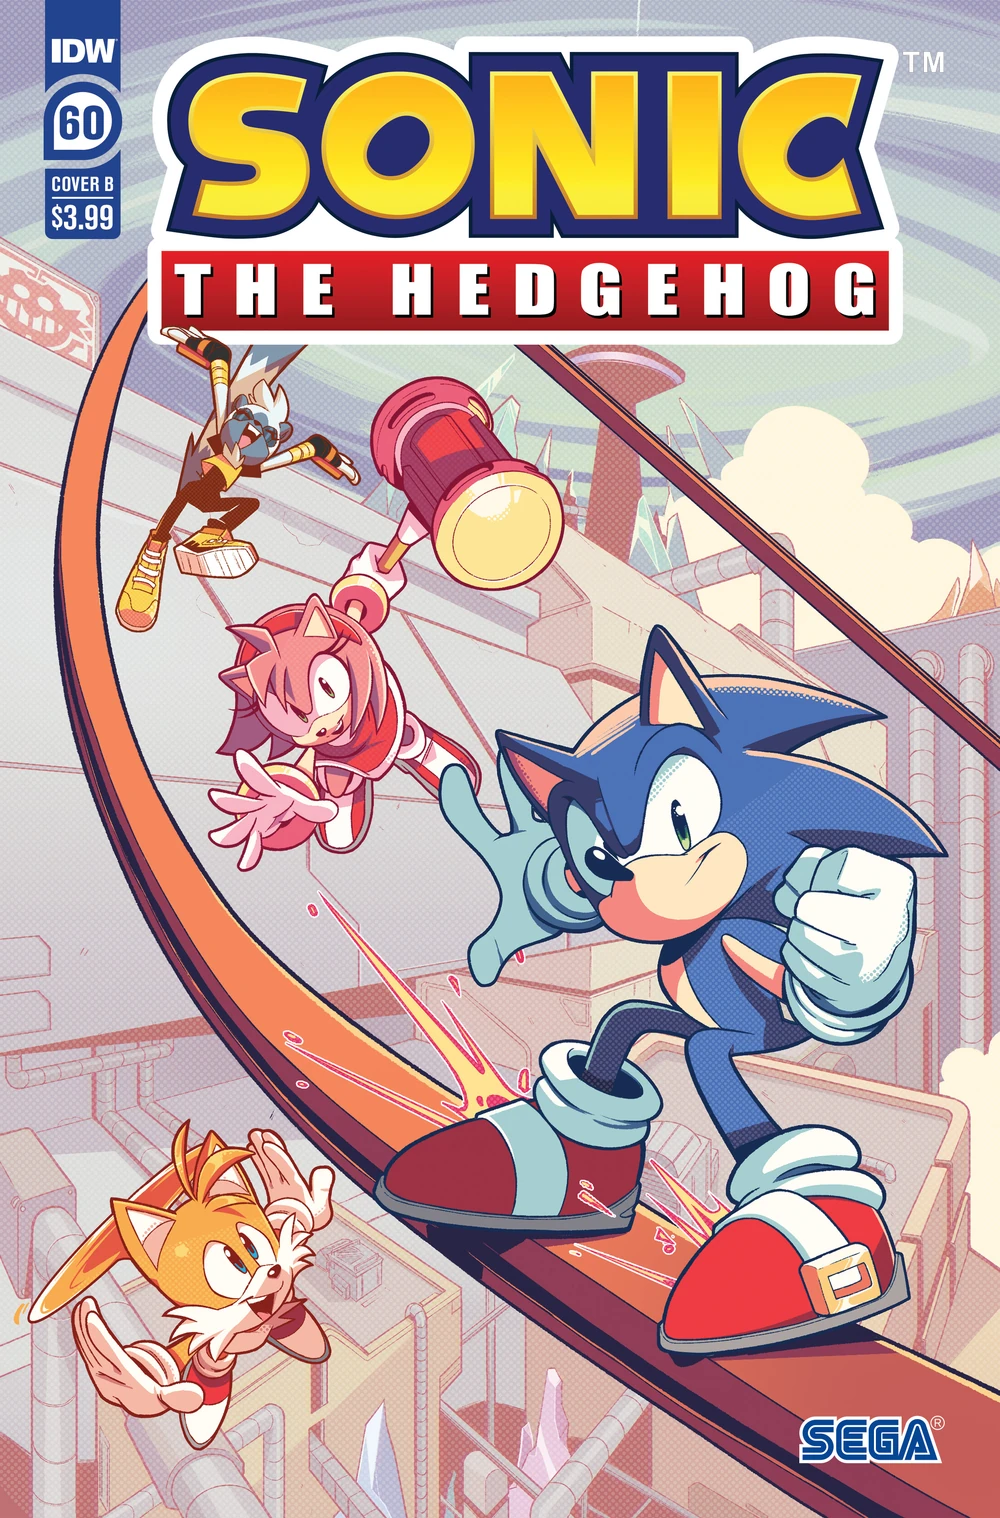 Sonic The Hedgehog #60 Cover B